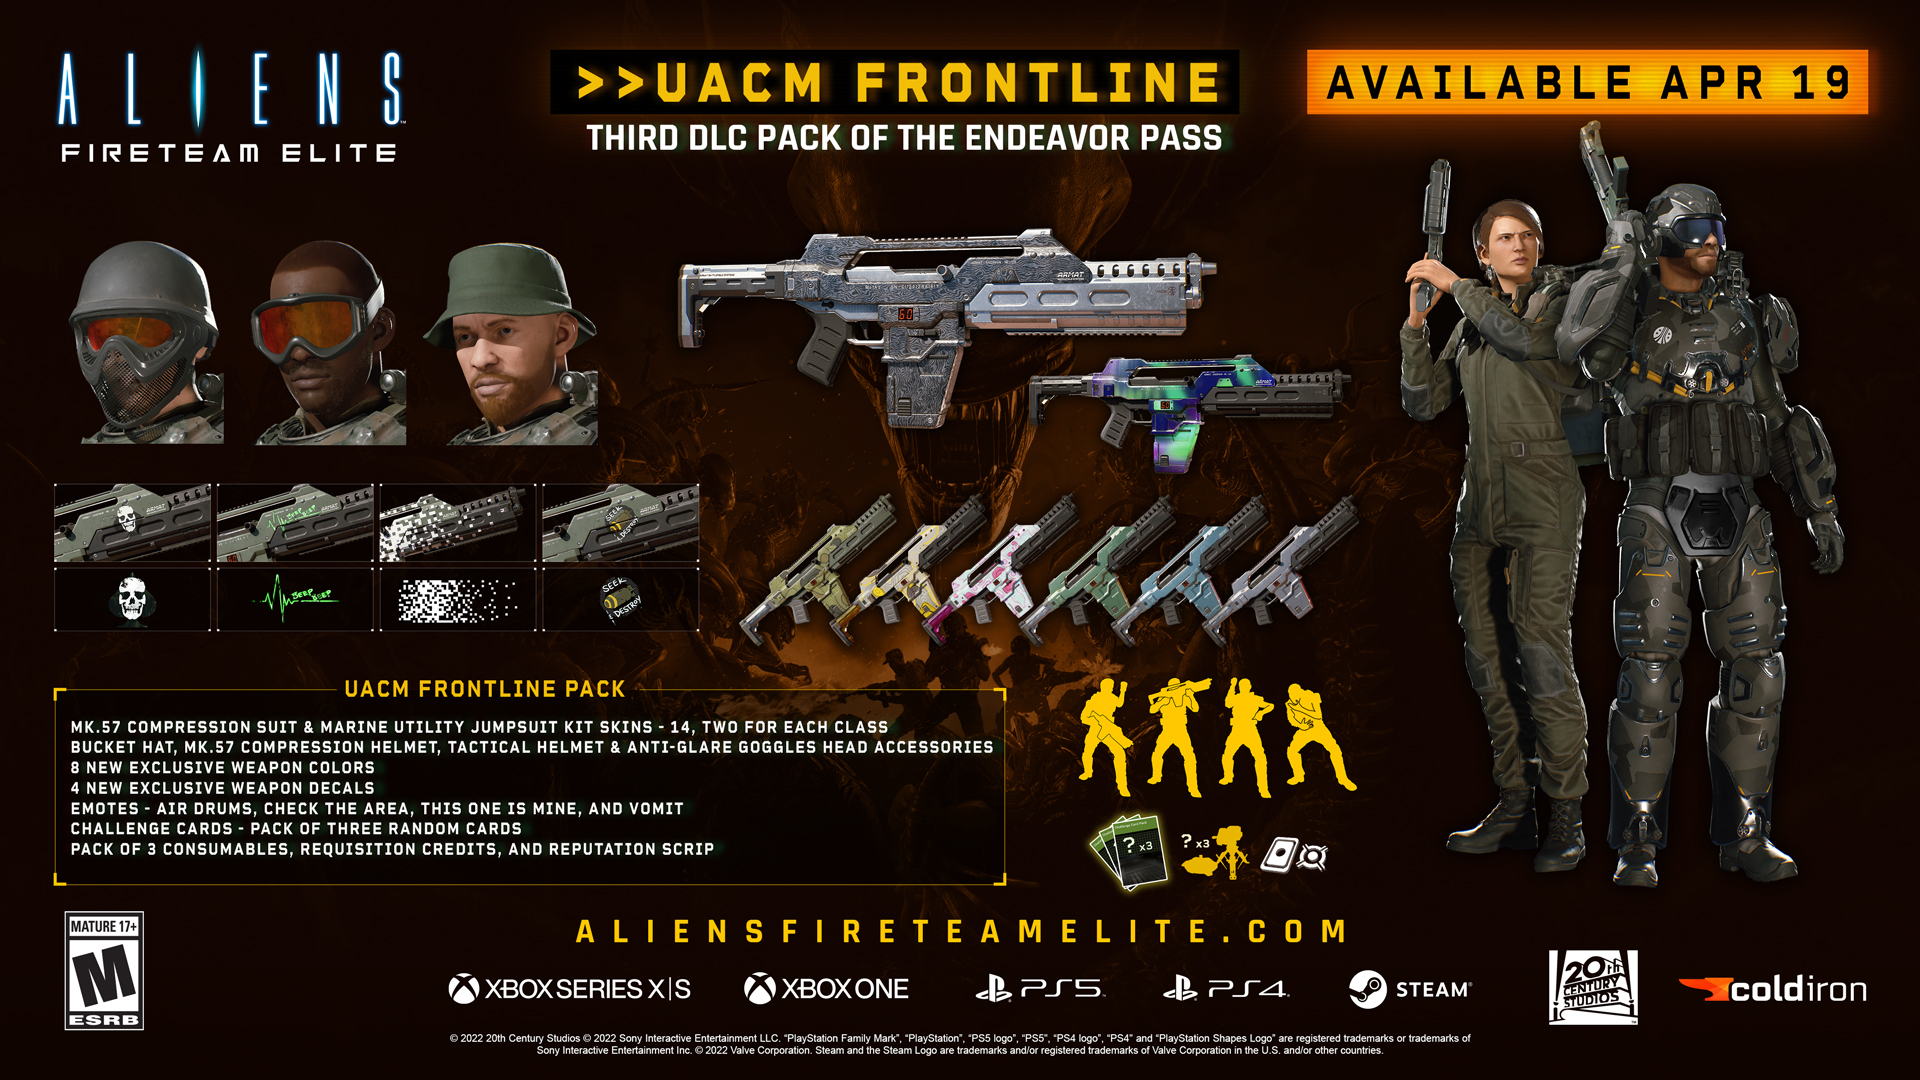 aliens fireteam elite UACM Frontline Pack